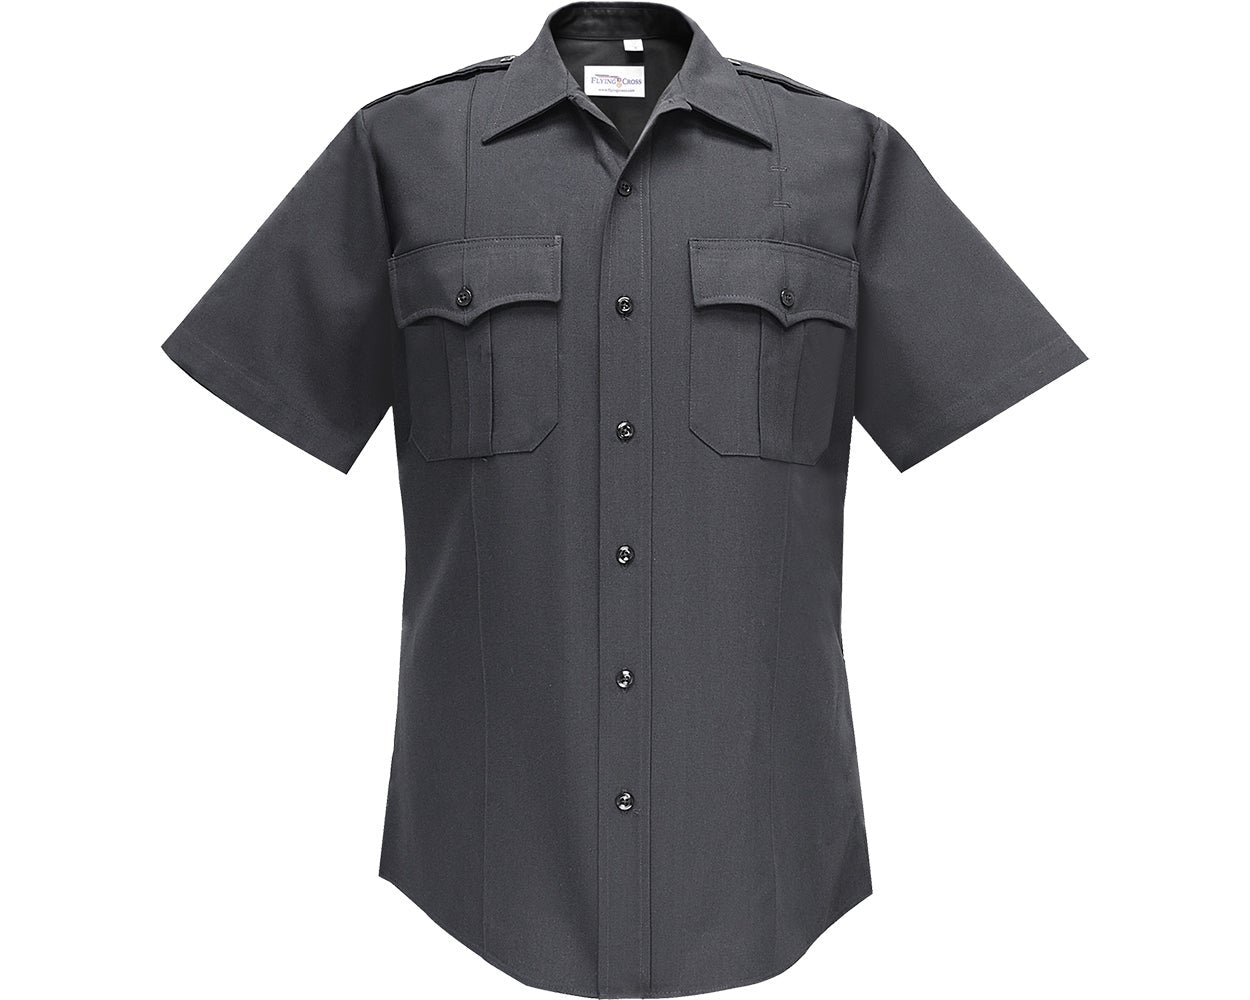 Flying Cross Command 100% Polyester Men's Short Sleeve Uniform Shirt with Zipper 85R77Z/87R78Z - Black, 17